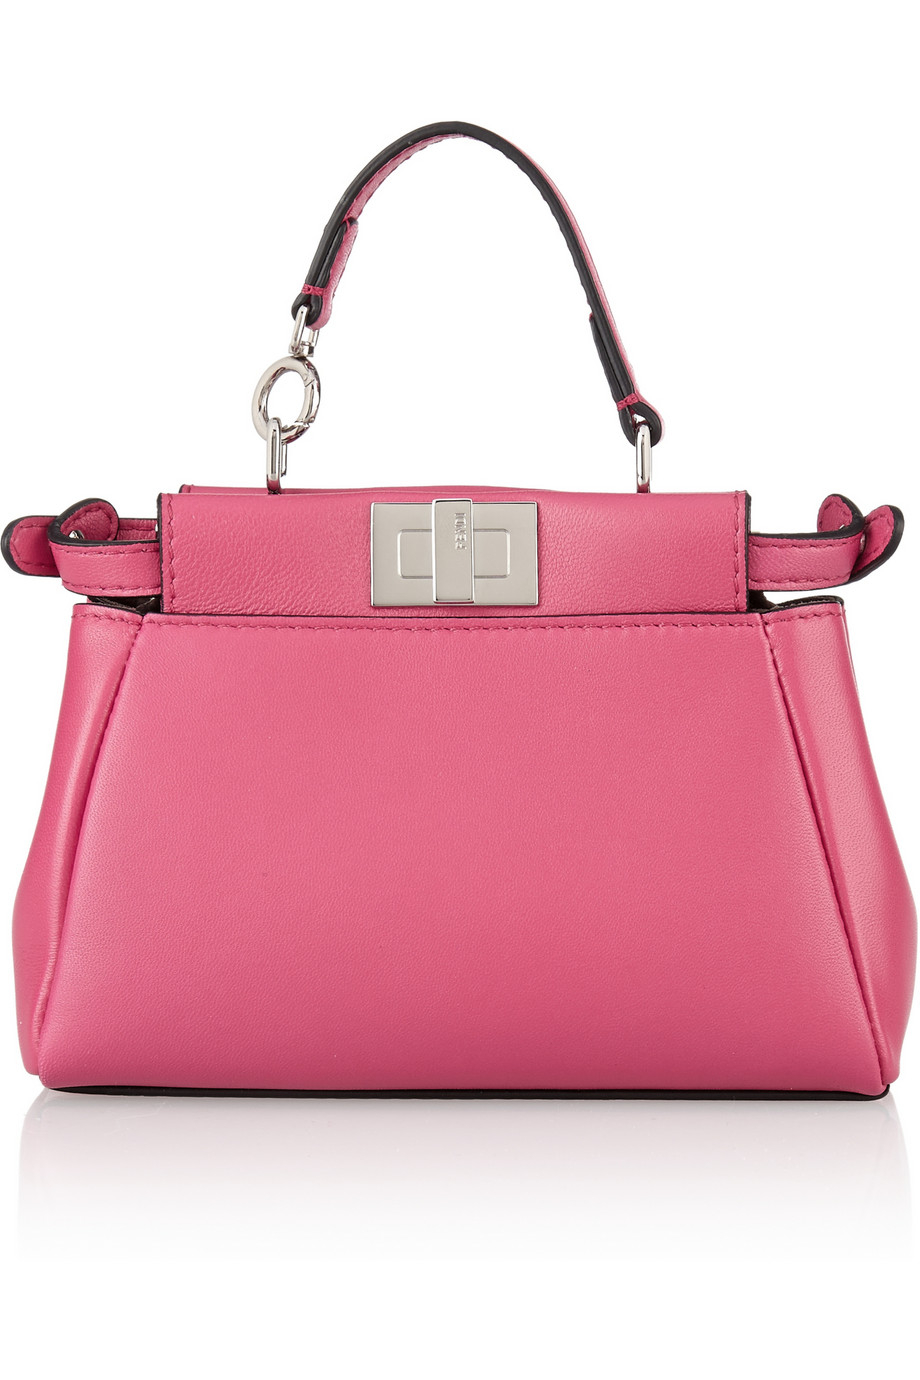 Lyst - Fendi Peekaboo Micro Leather Shoulder Bag in Pink